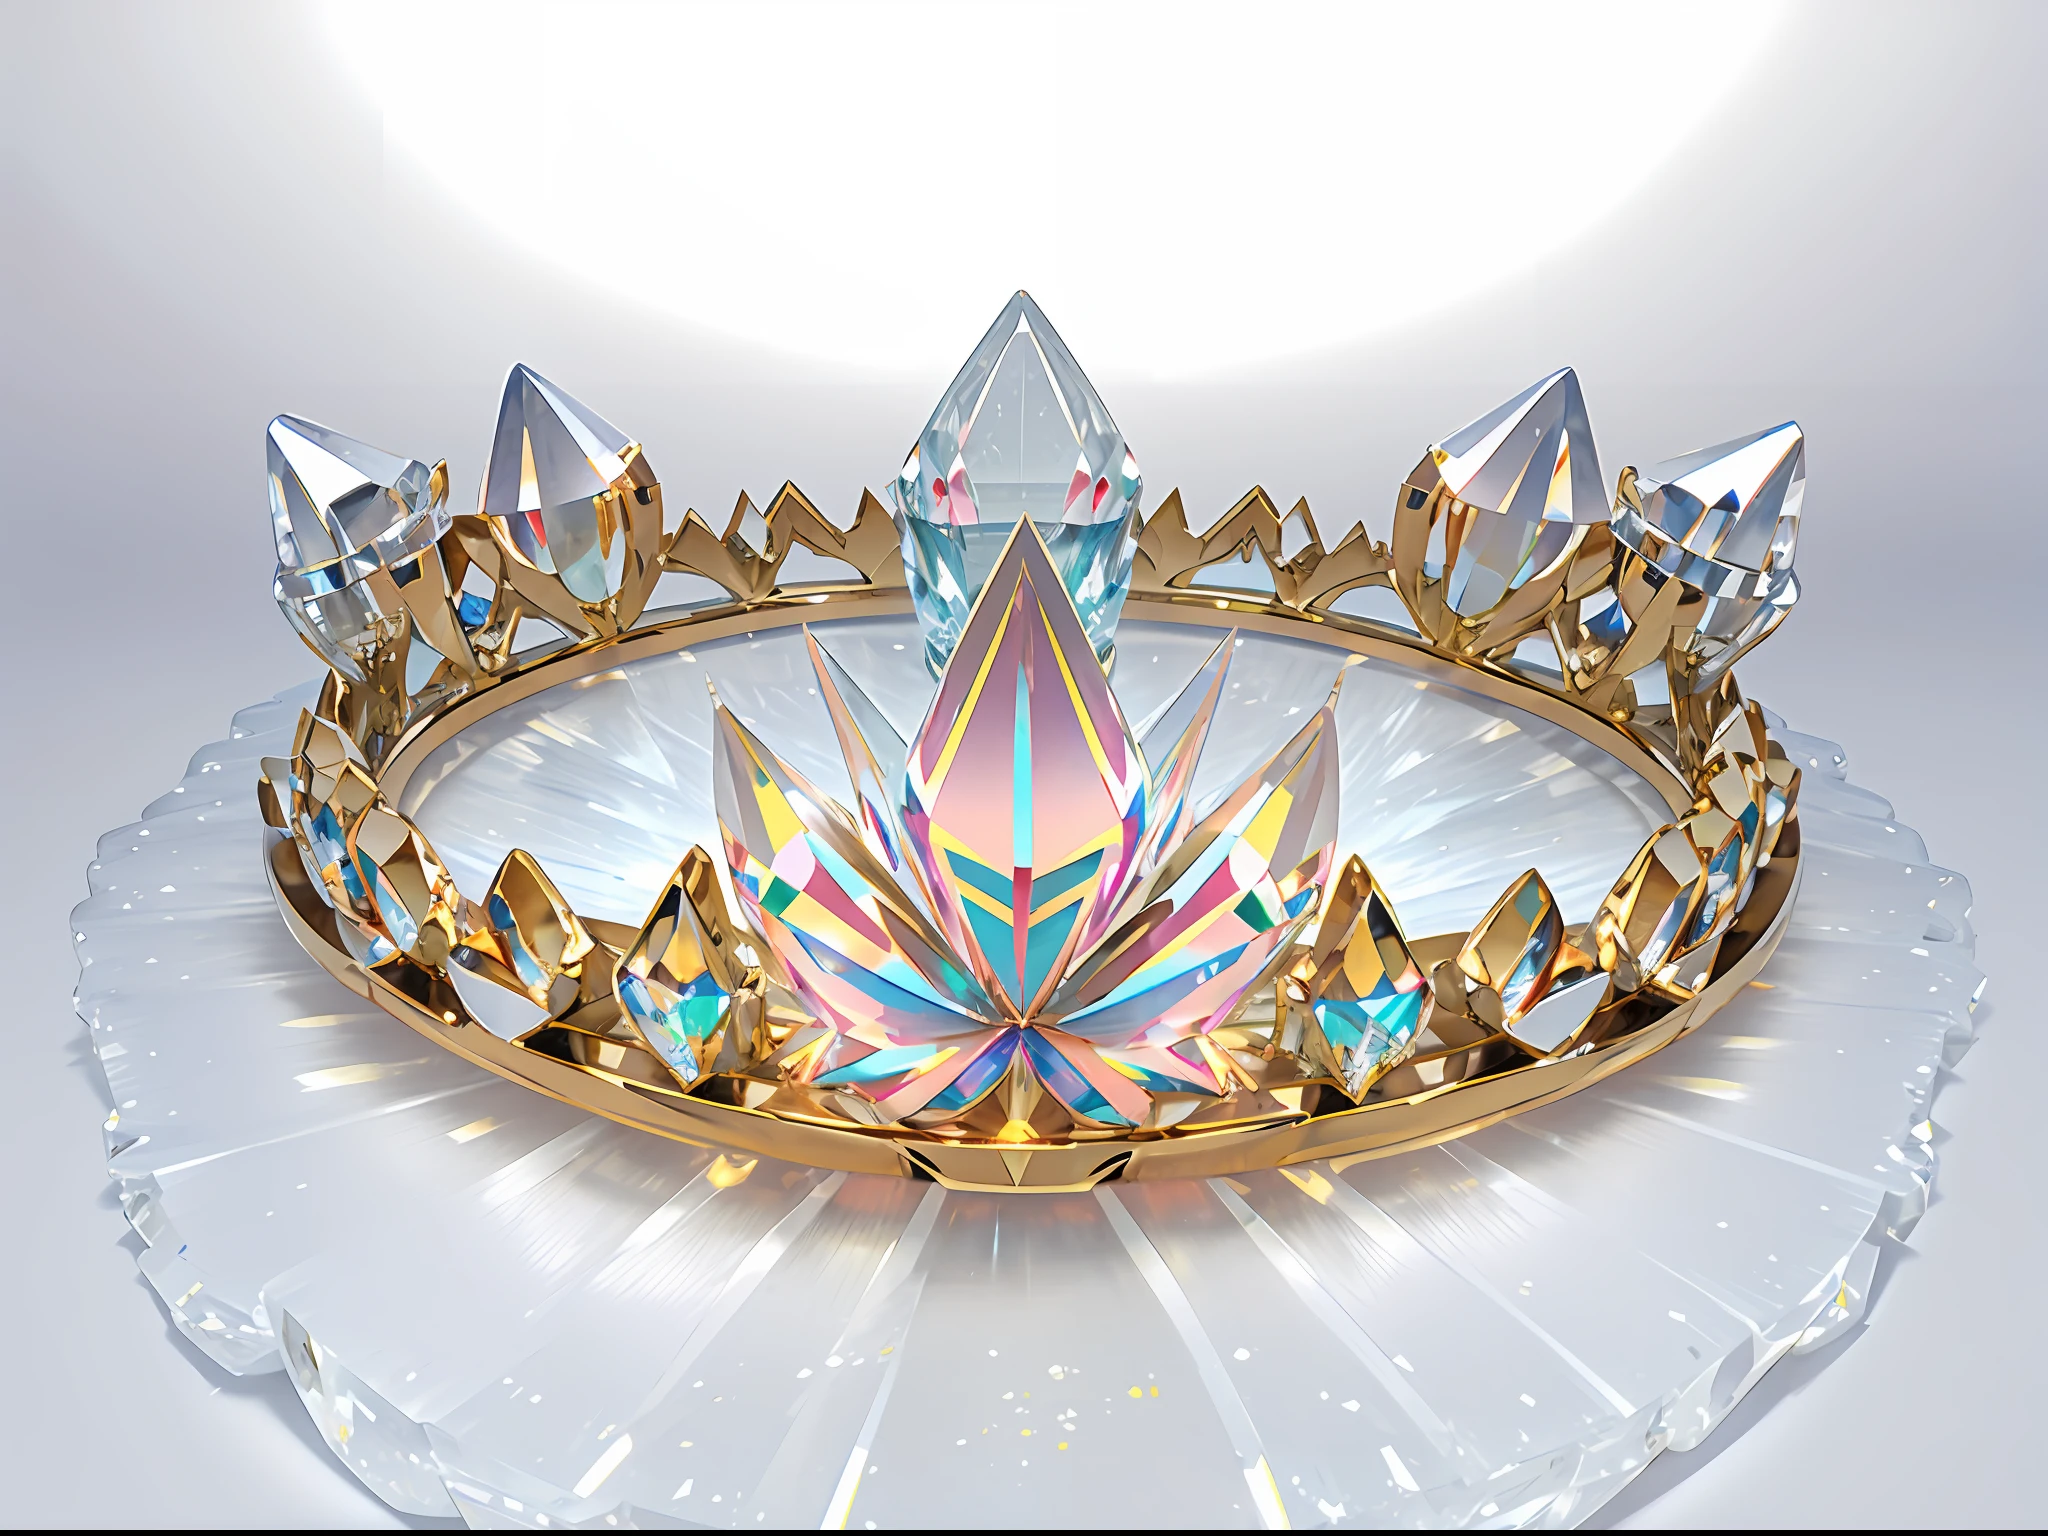 8k, (primer plano de la corona), perspectiva positiva!! , con una corona de diamantes sobre fondo blanco, alas de diamante!! ,(((((Ring corona)))),(White corona))))),(cristal blanco)))),((Left and Right Symmetrical corona)),(Slender corona)))),(lineas suaves)),Gorgeous and vistoso,(((vistoso)), diamantes complejos, Ultra-realistic Fantasy corona, Crystal corona, Crystal corona, White Laser corona, corola de cristal, Floating corona, (trazado de rayos), ((fondo limpio)), corona, Flower corona, corona, Giant Diamond corona, Tocado de diamantes, increíble corona de flores, corona de diamantes --auto --s2